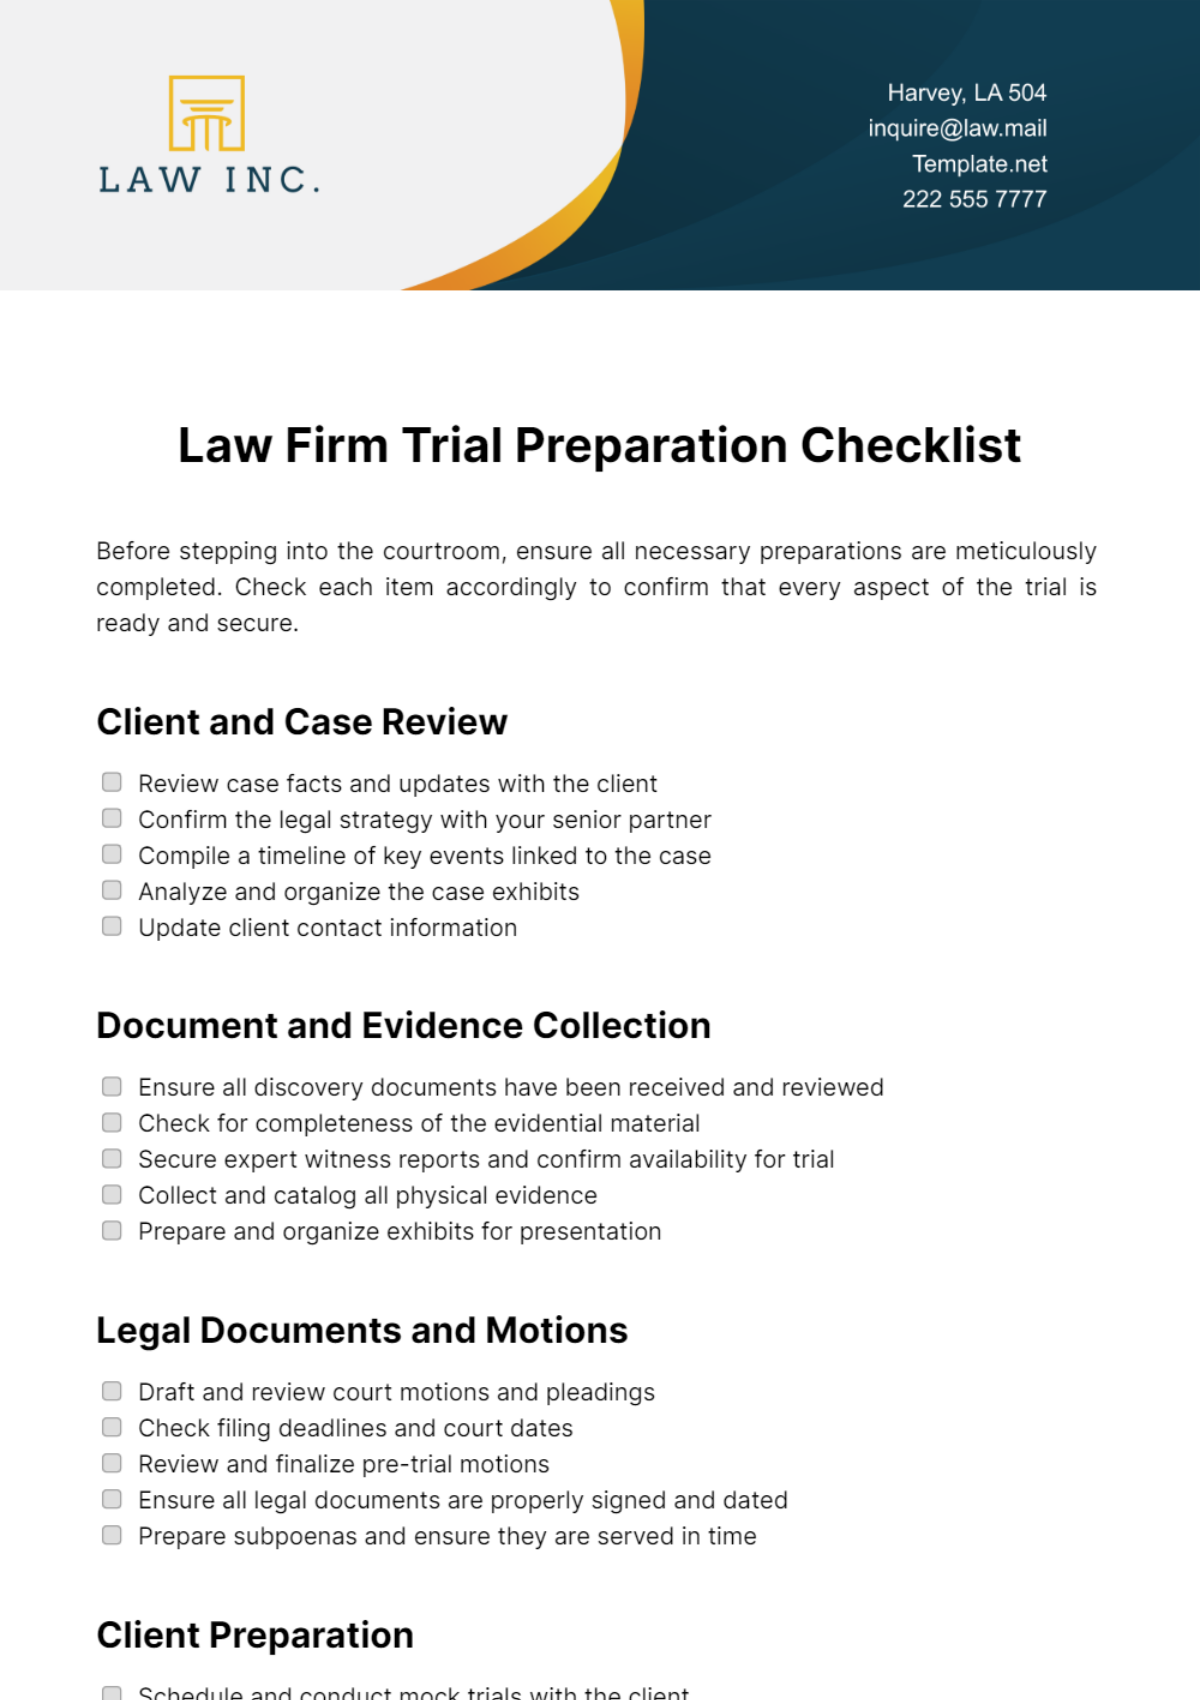 Law Firm Trial Preparation Checklist Template